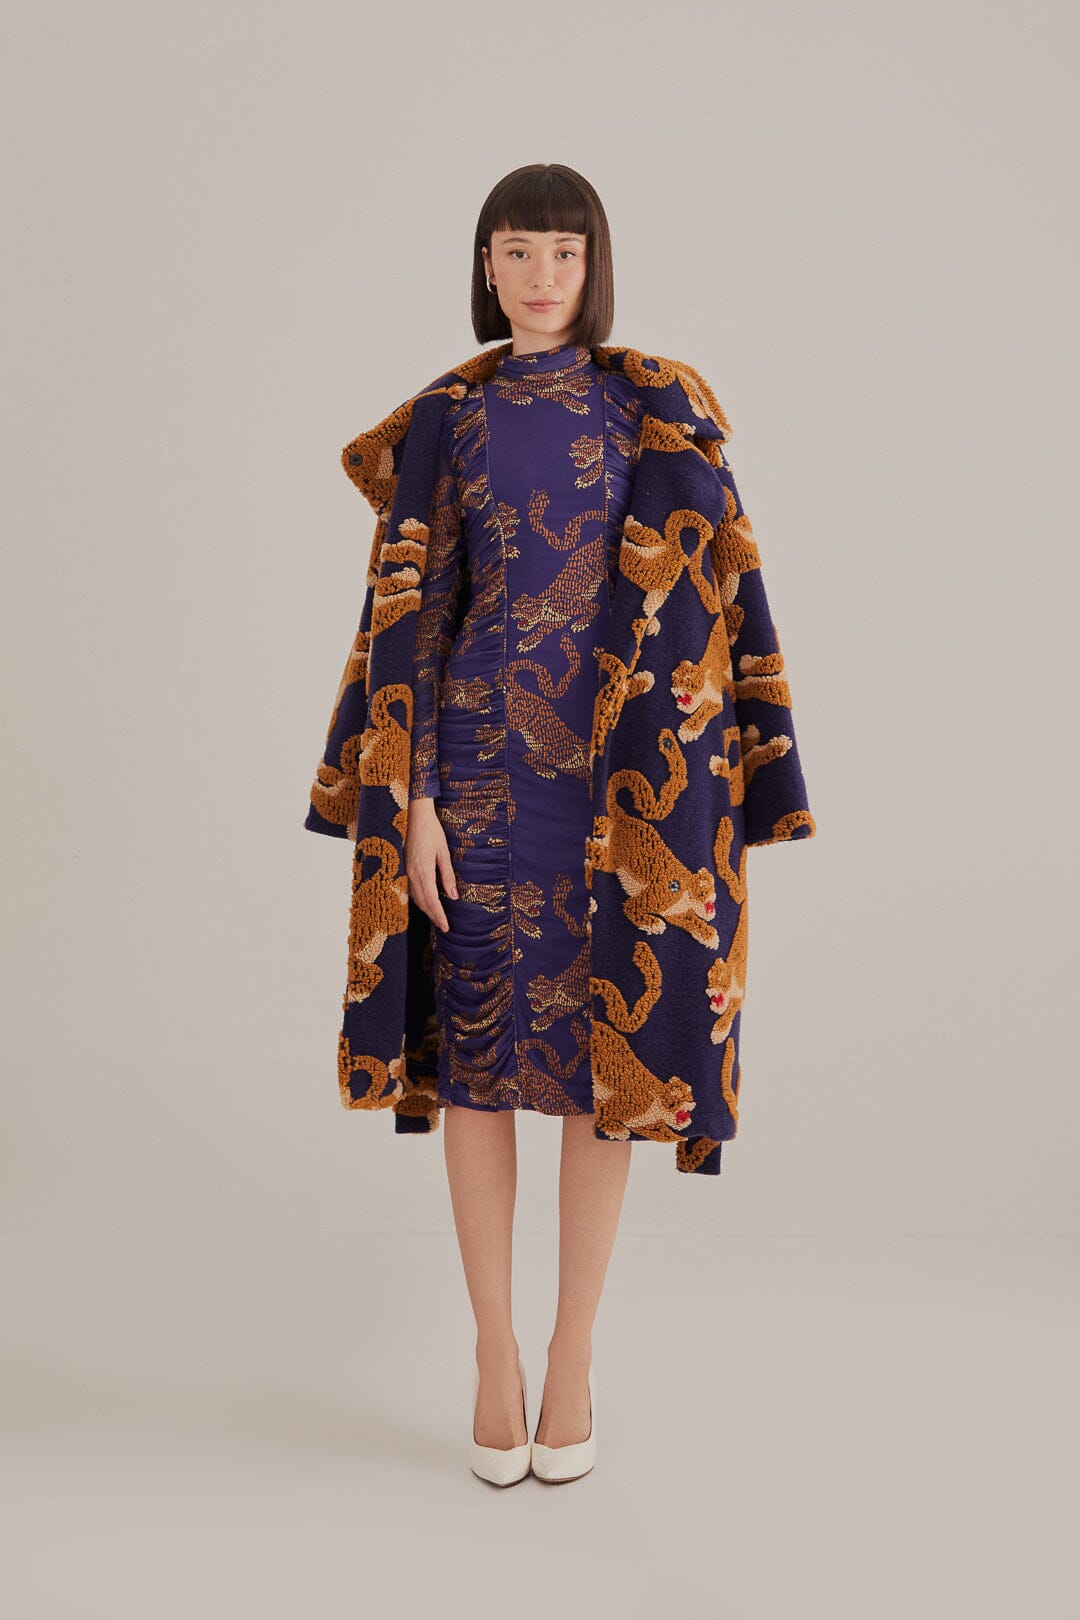 Farm Rio Flowered Leopards Midi Womens Dress XL Smocked Long Sleeve $265